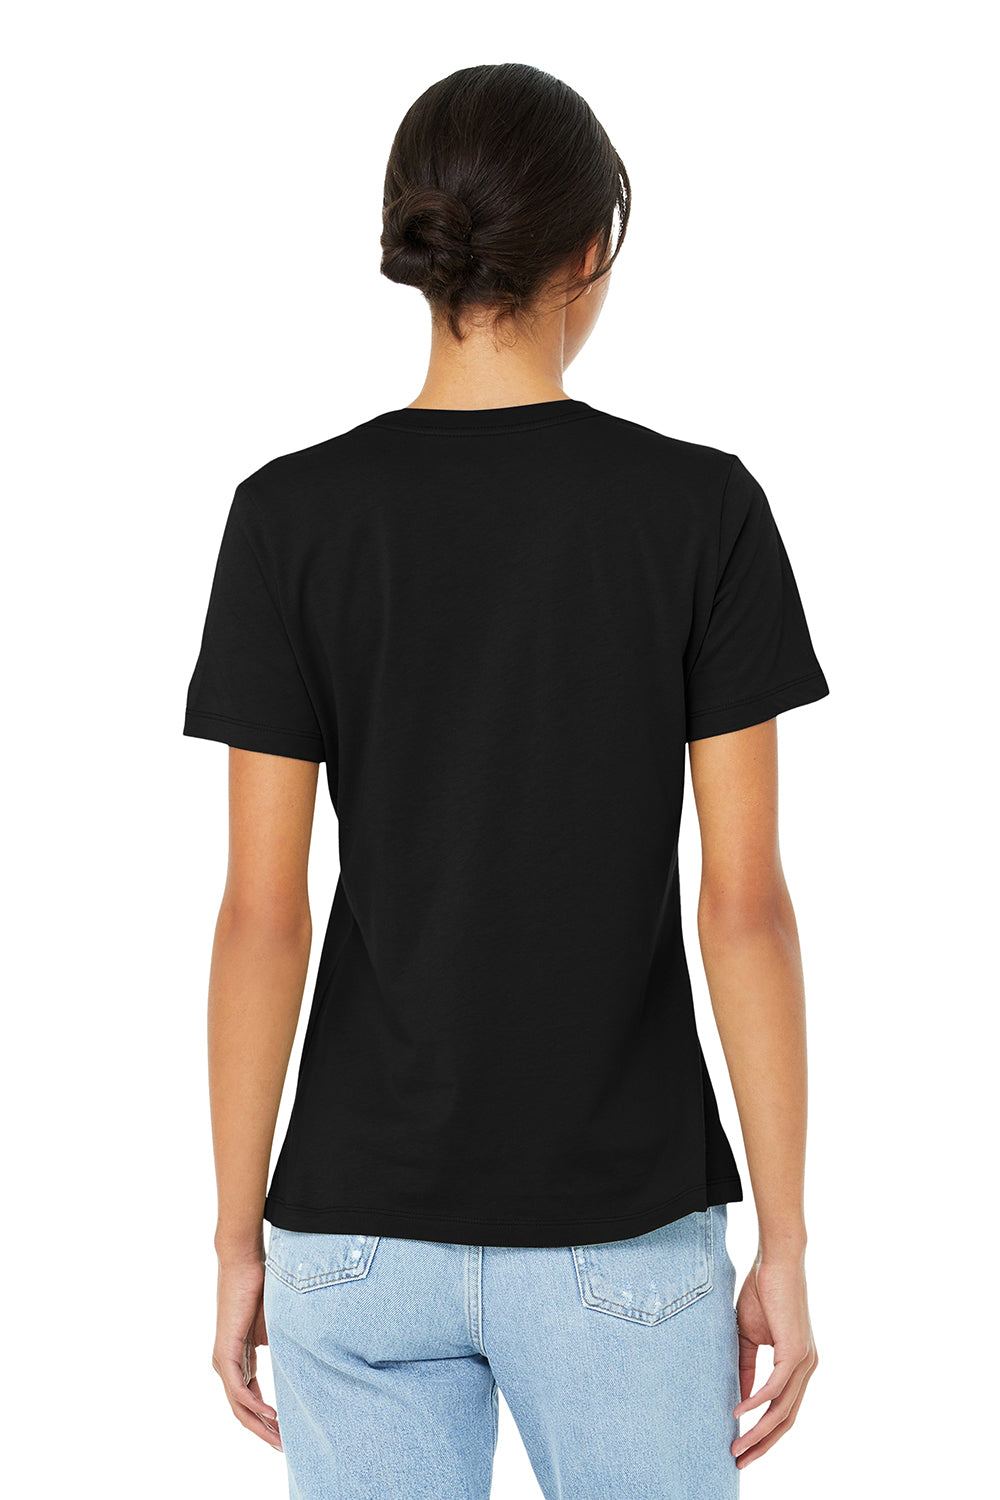 Bella + Canvas BC6400CVC/6400CVC Womens CVC Short Sleeve Crewneck T-Shirt Solid Black Model Back